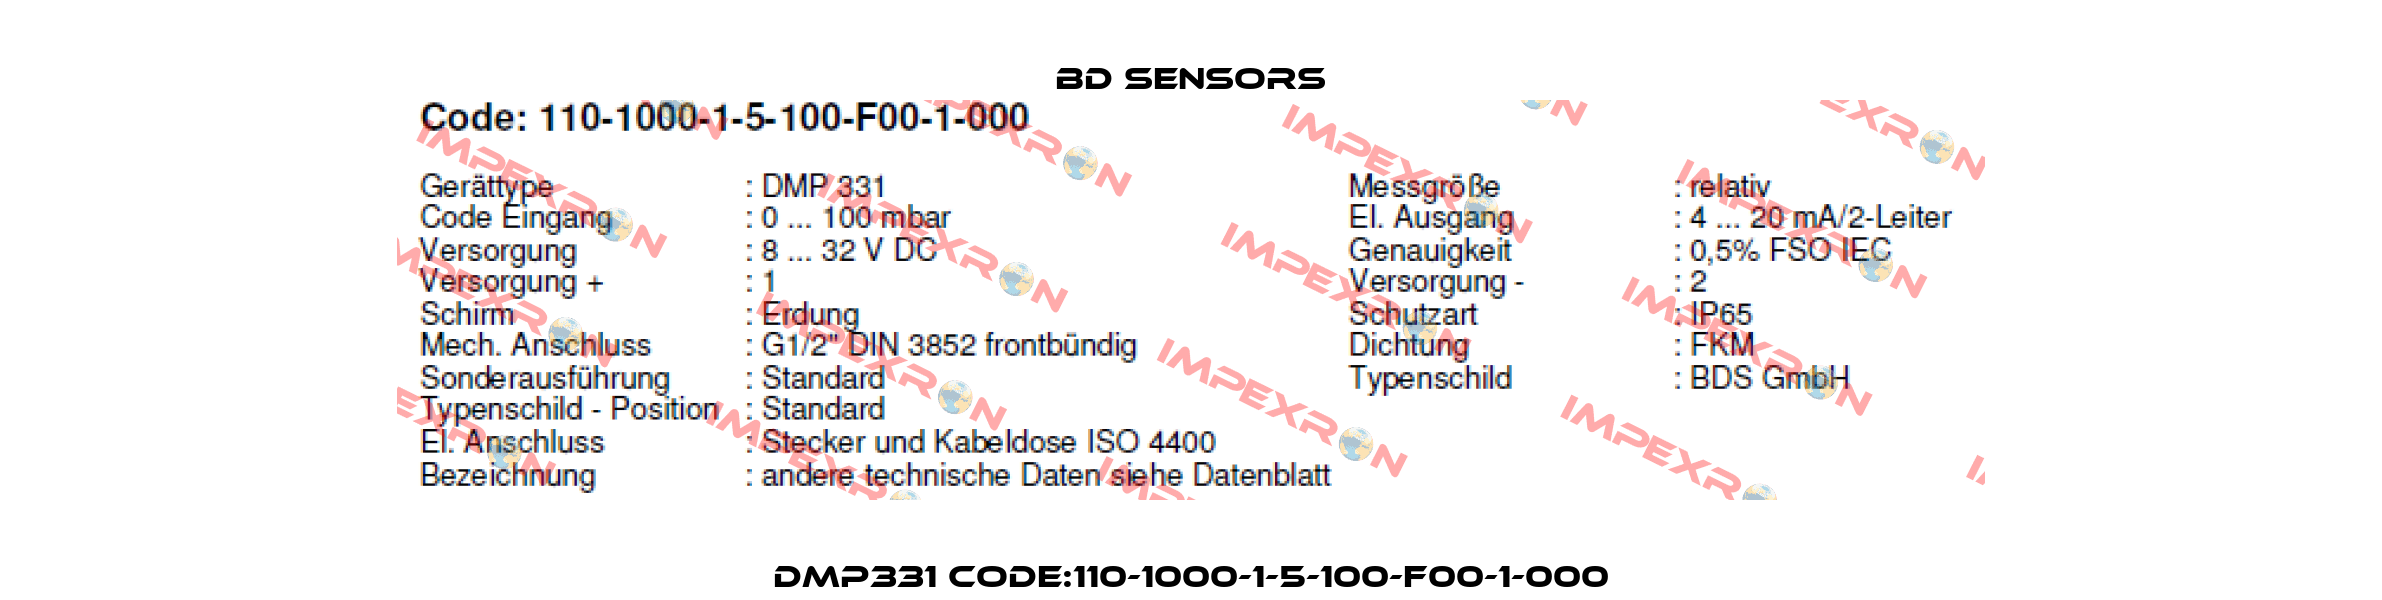 DMP331 Code:110-1000-1-5-100-F00-1-000 Bd Sensors